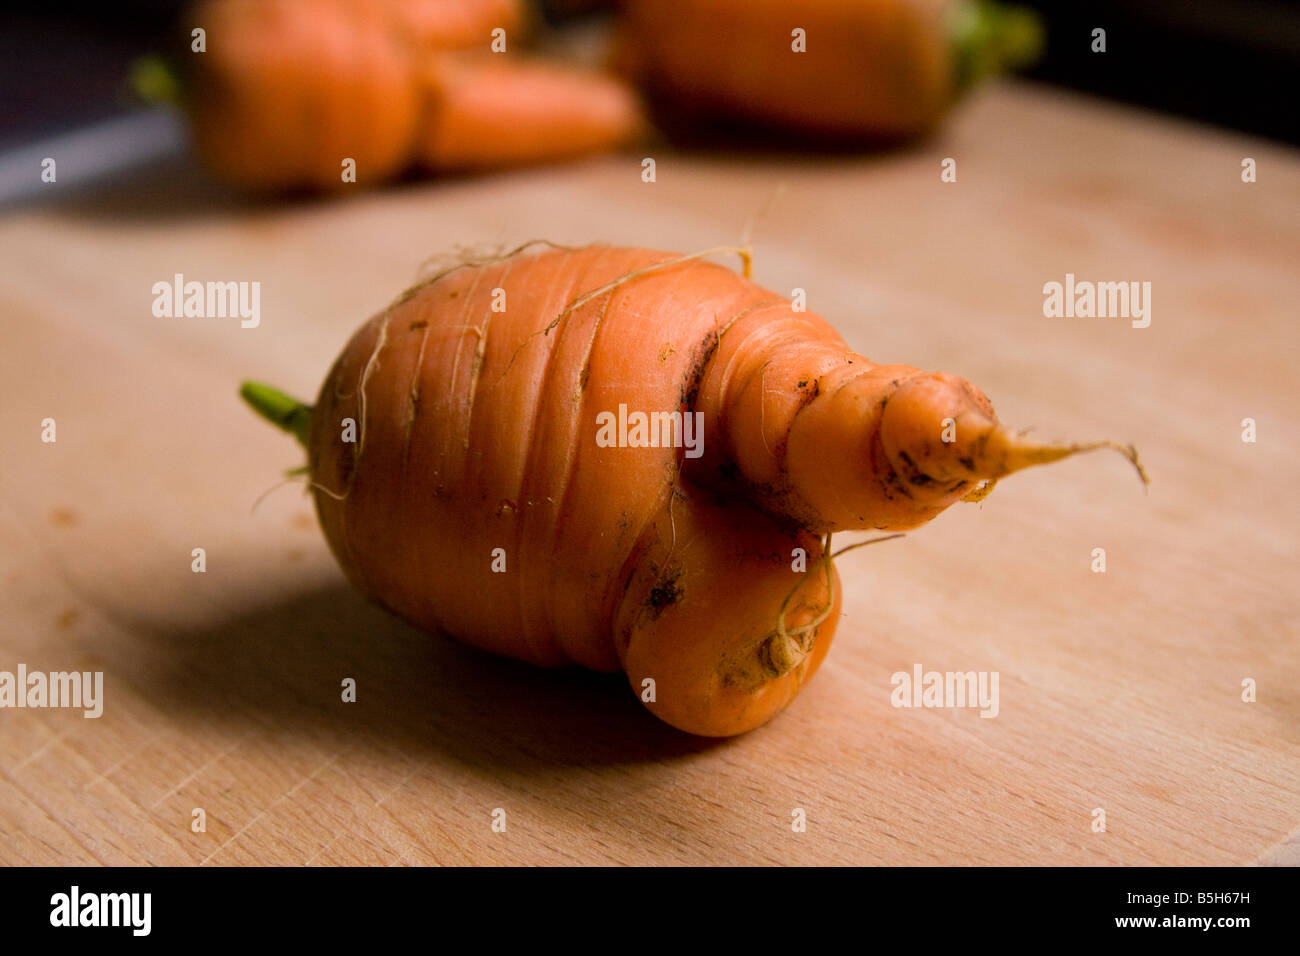 Misshapen home-grown carrots on wooden chopping board Stock Photo